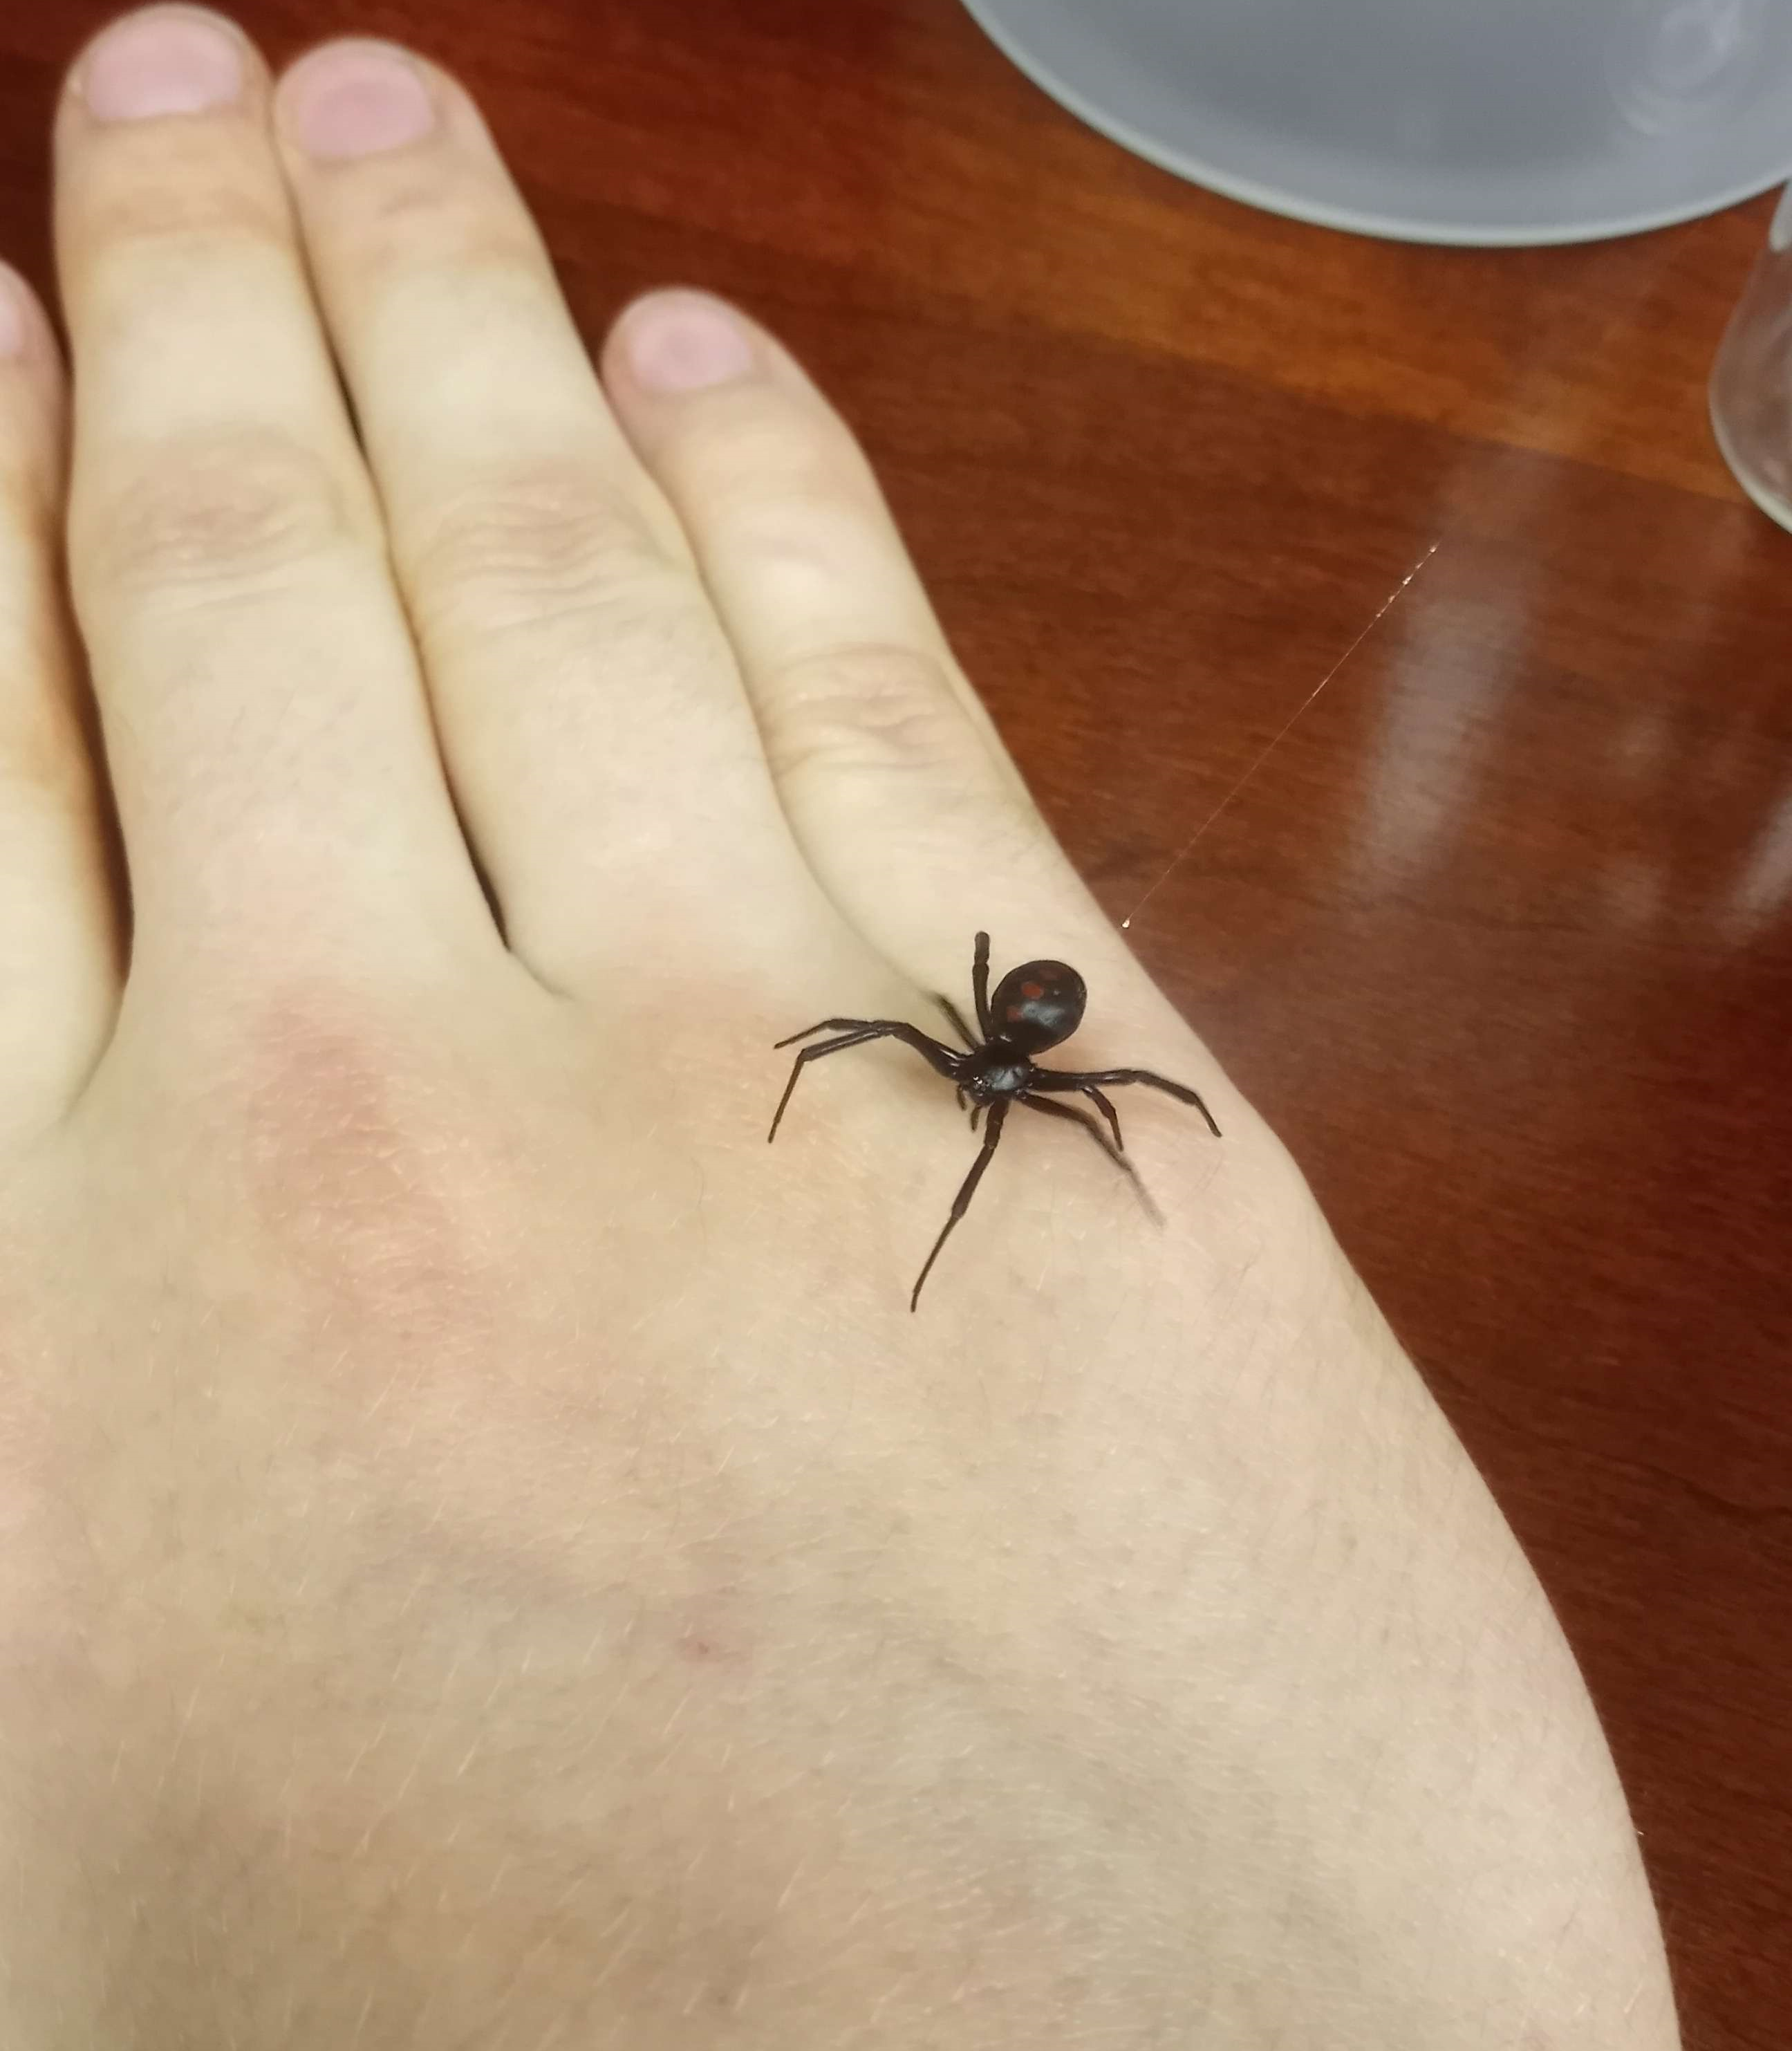 black widow on my hand